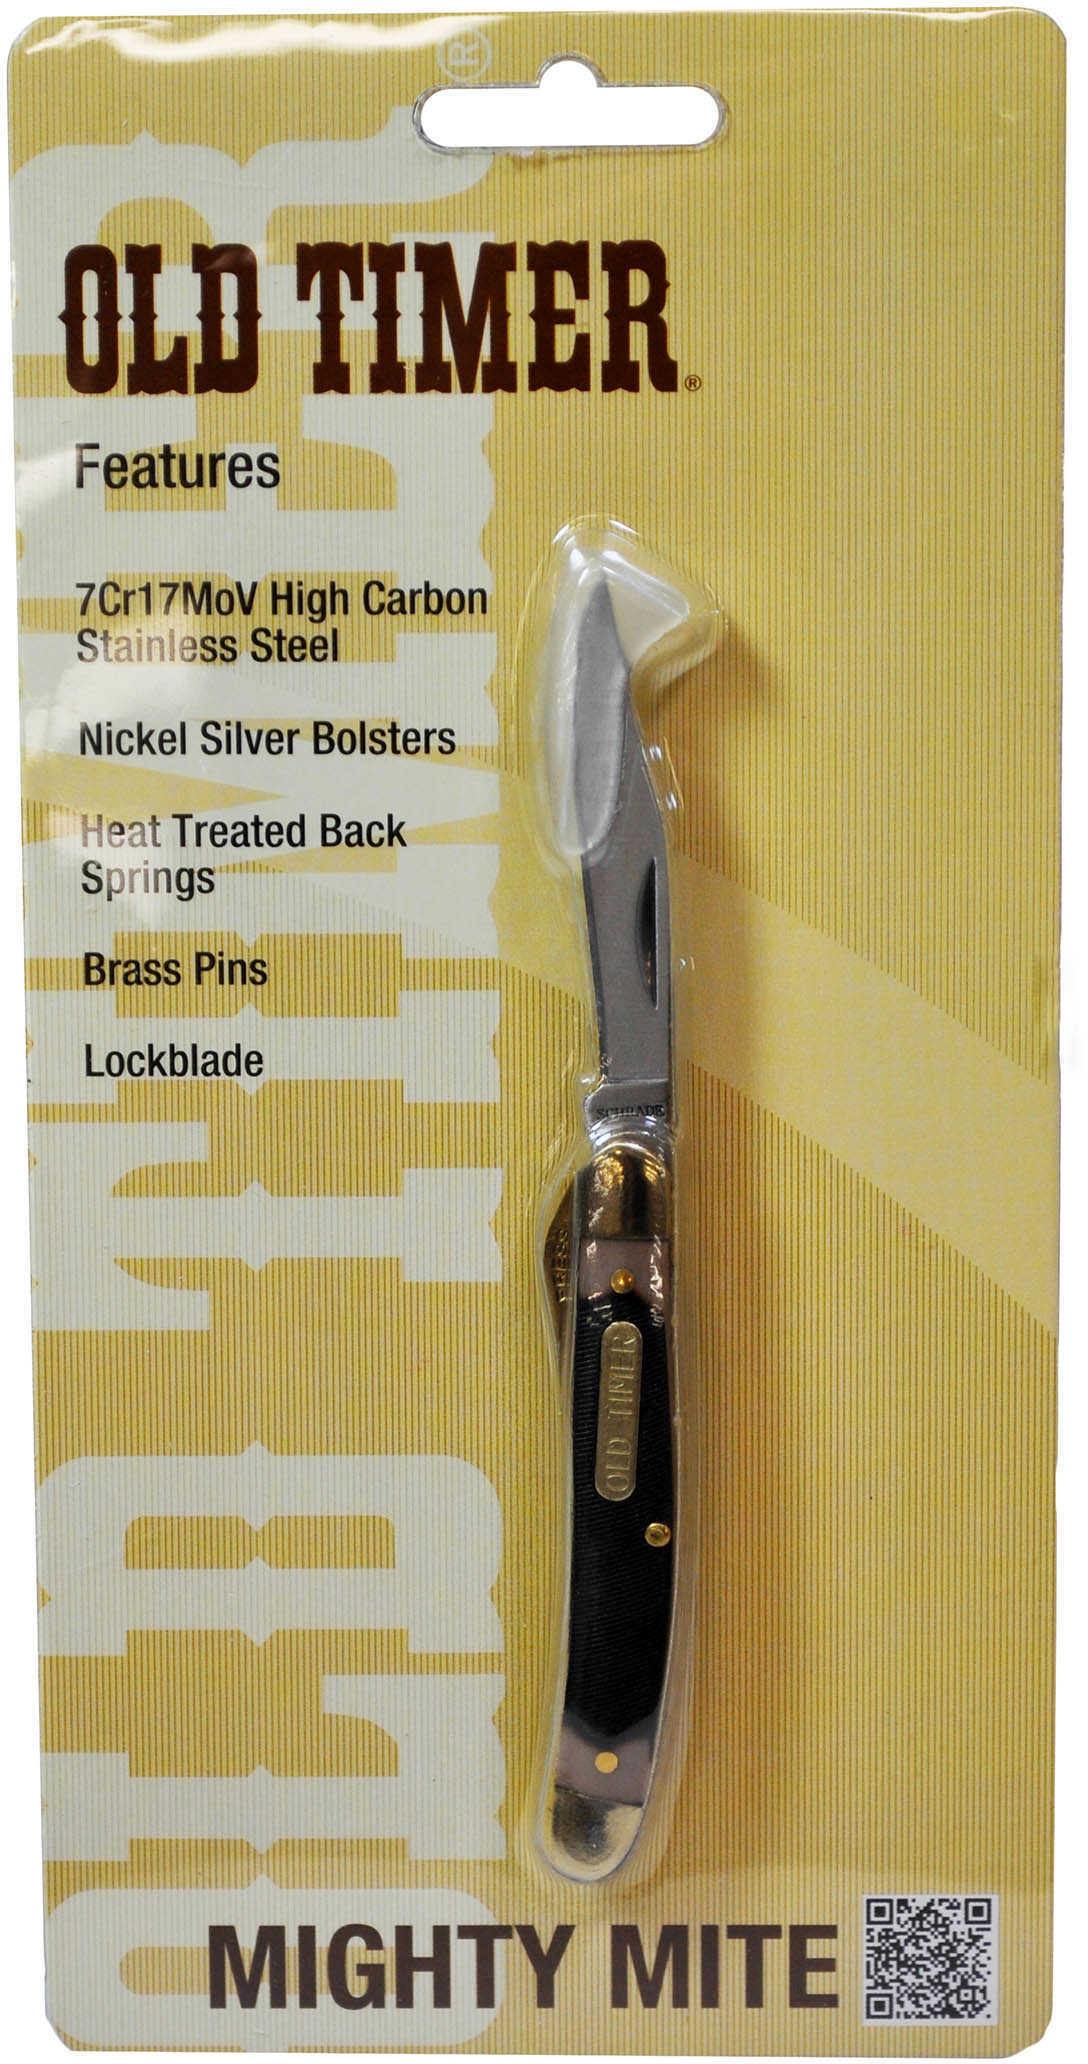 BTI Tools Mighty Mite Lock Blade 2 3/4" Closed, Clam Md: 18OTCP